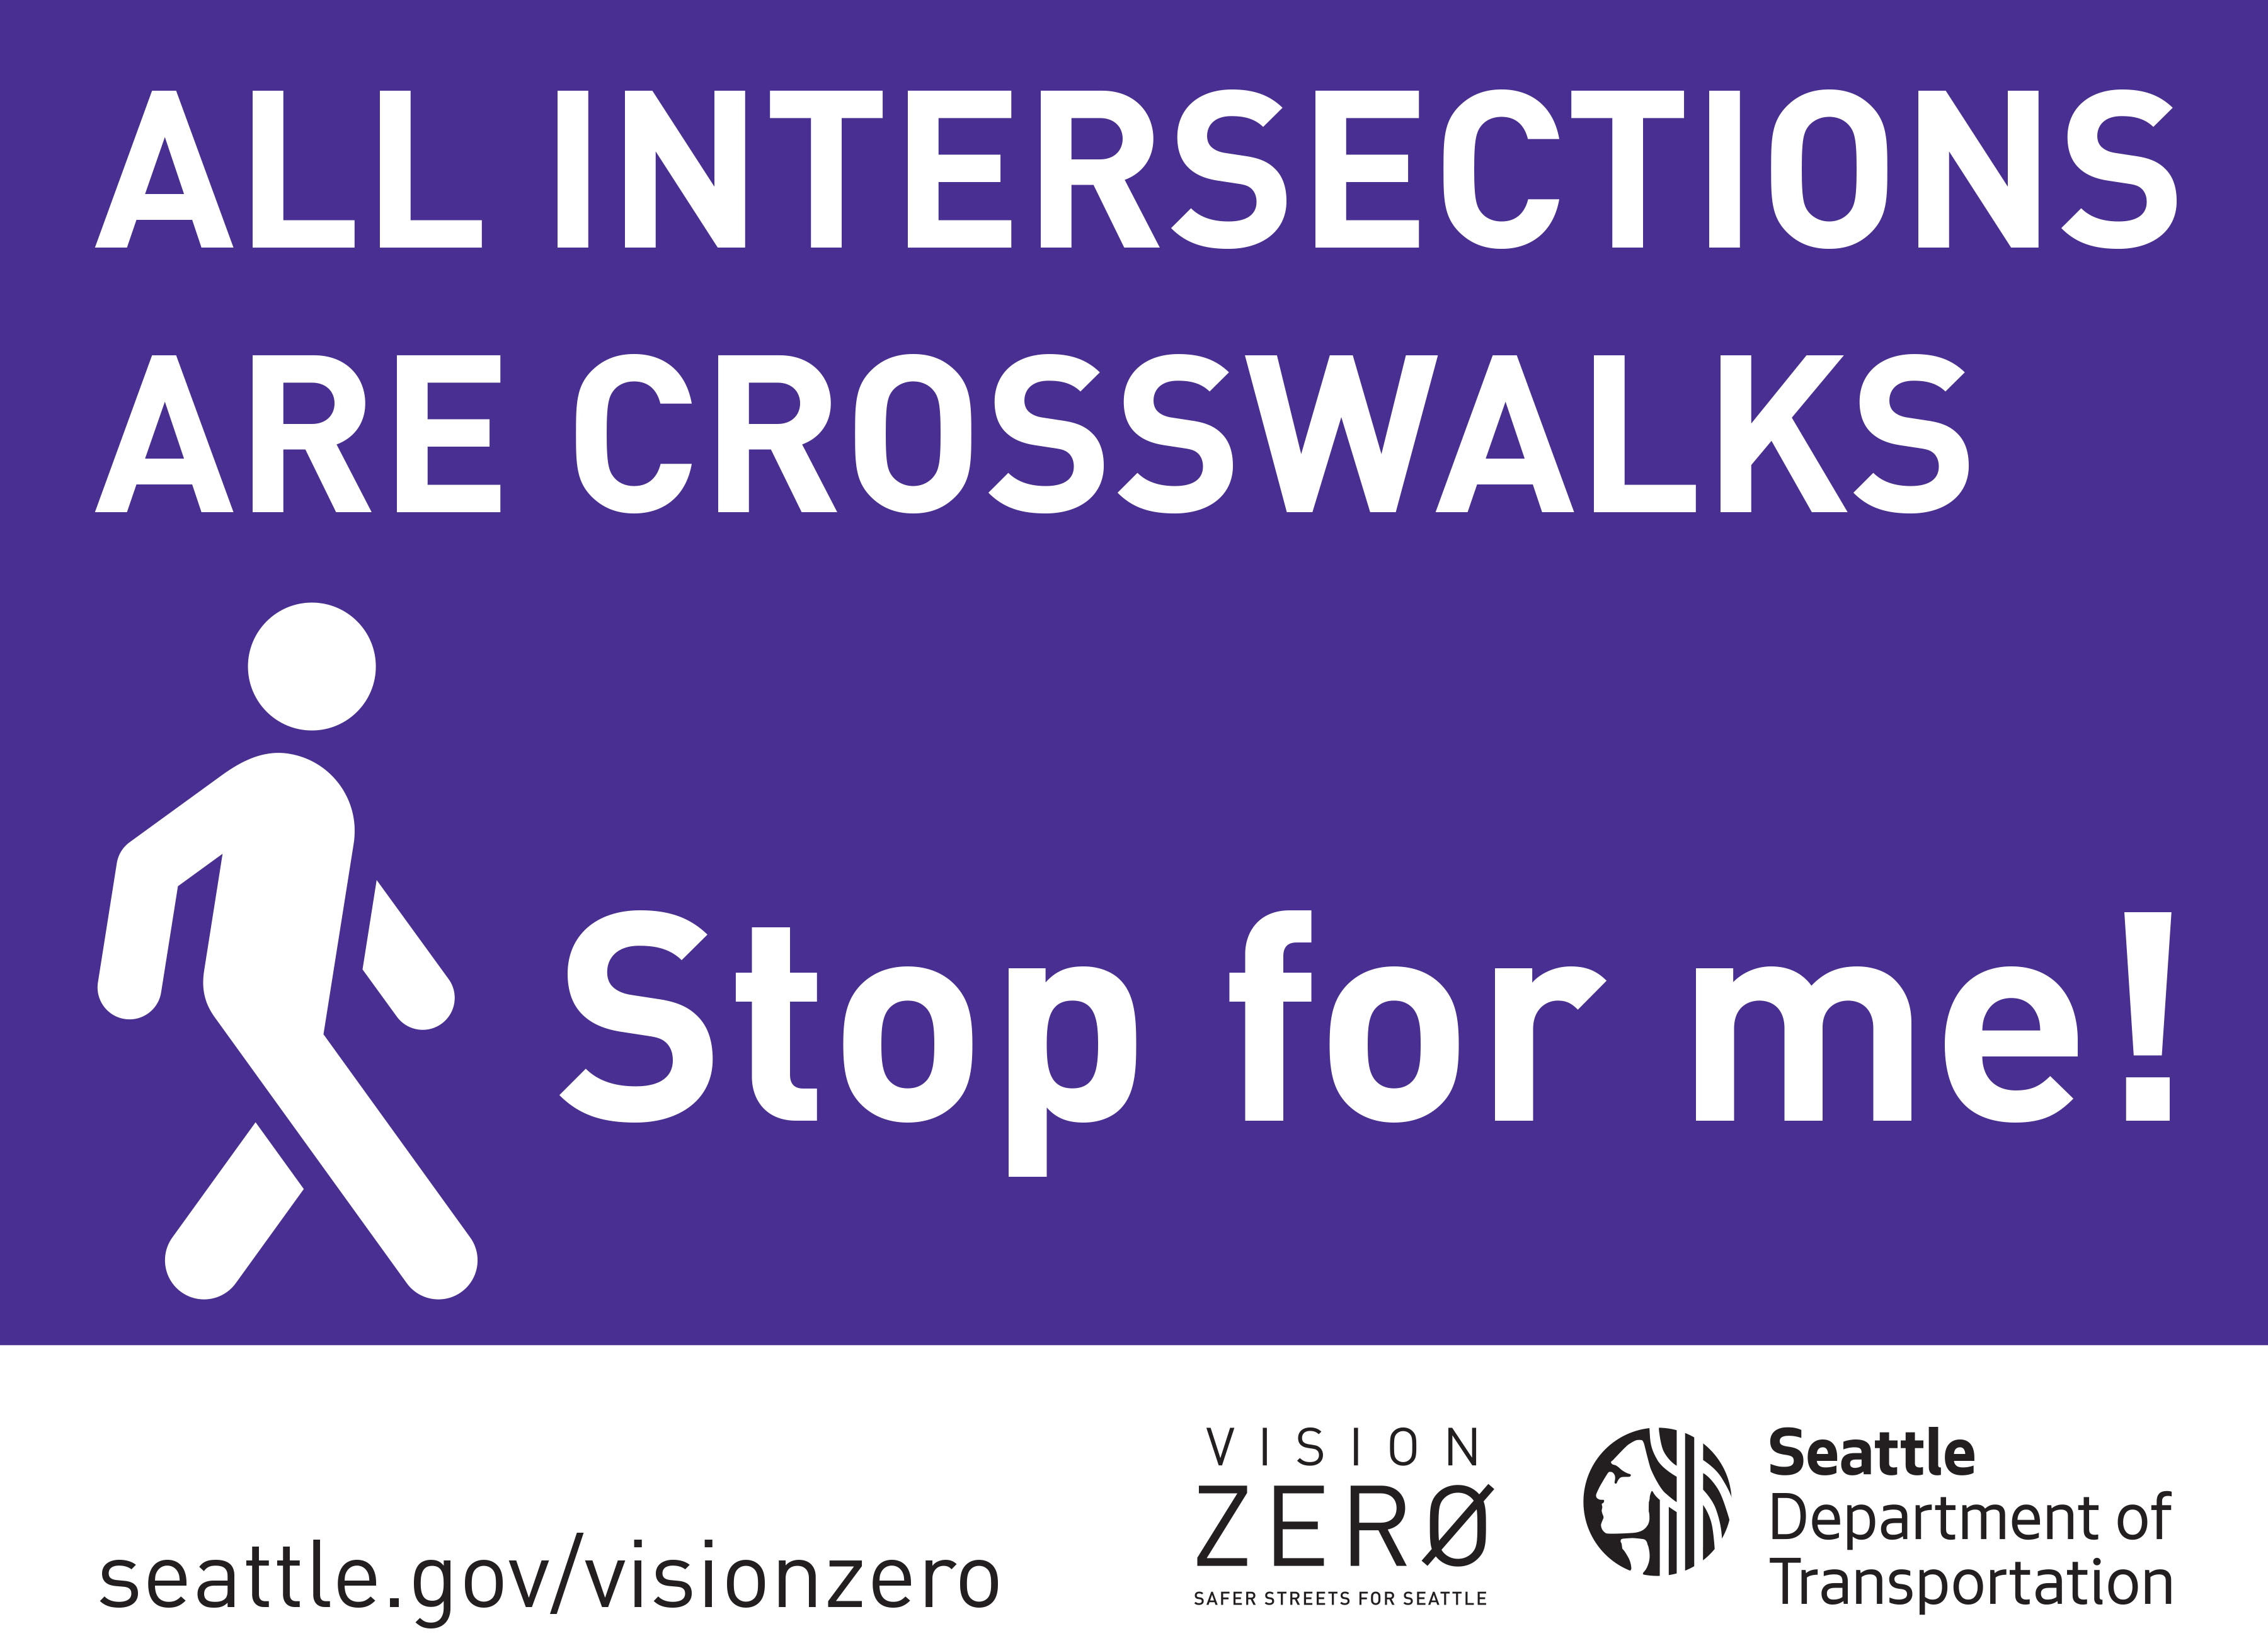 Stop for Pedestrians